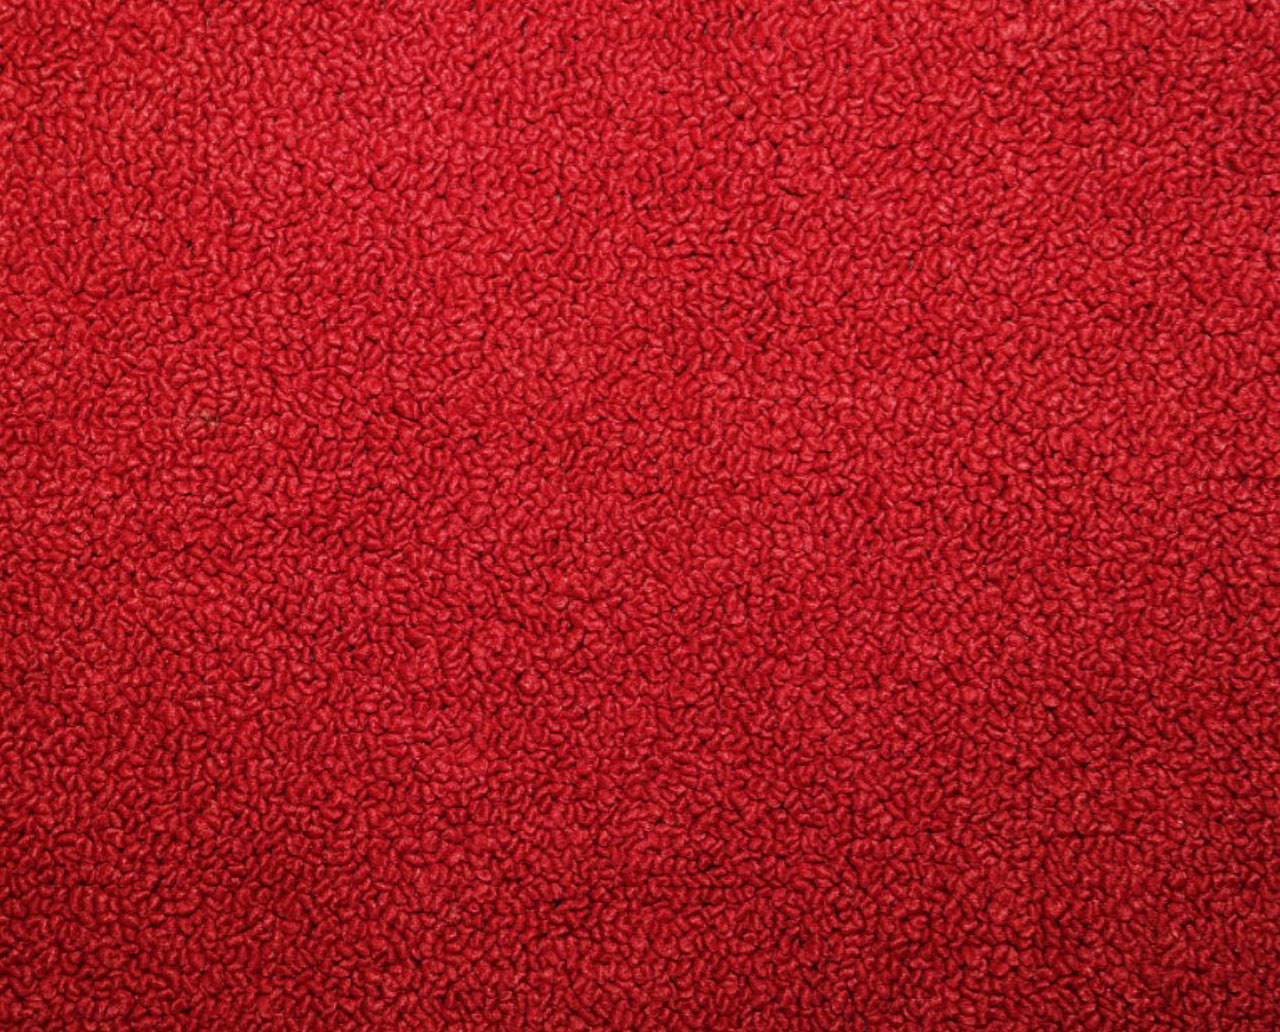 Holden Torana LC Torana SL Coupe 42P Calypso Red Carpet (Image 1 of 1)